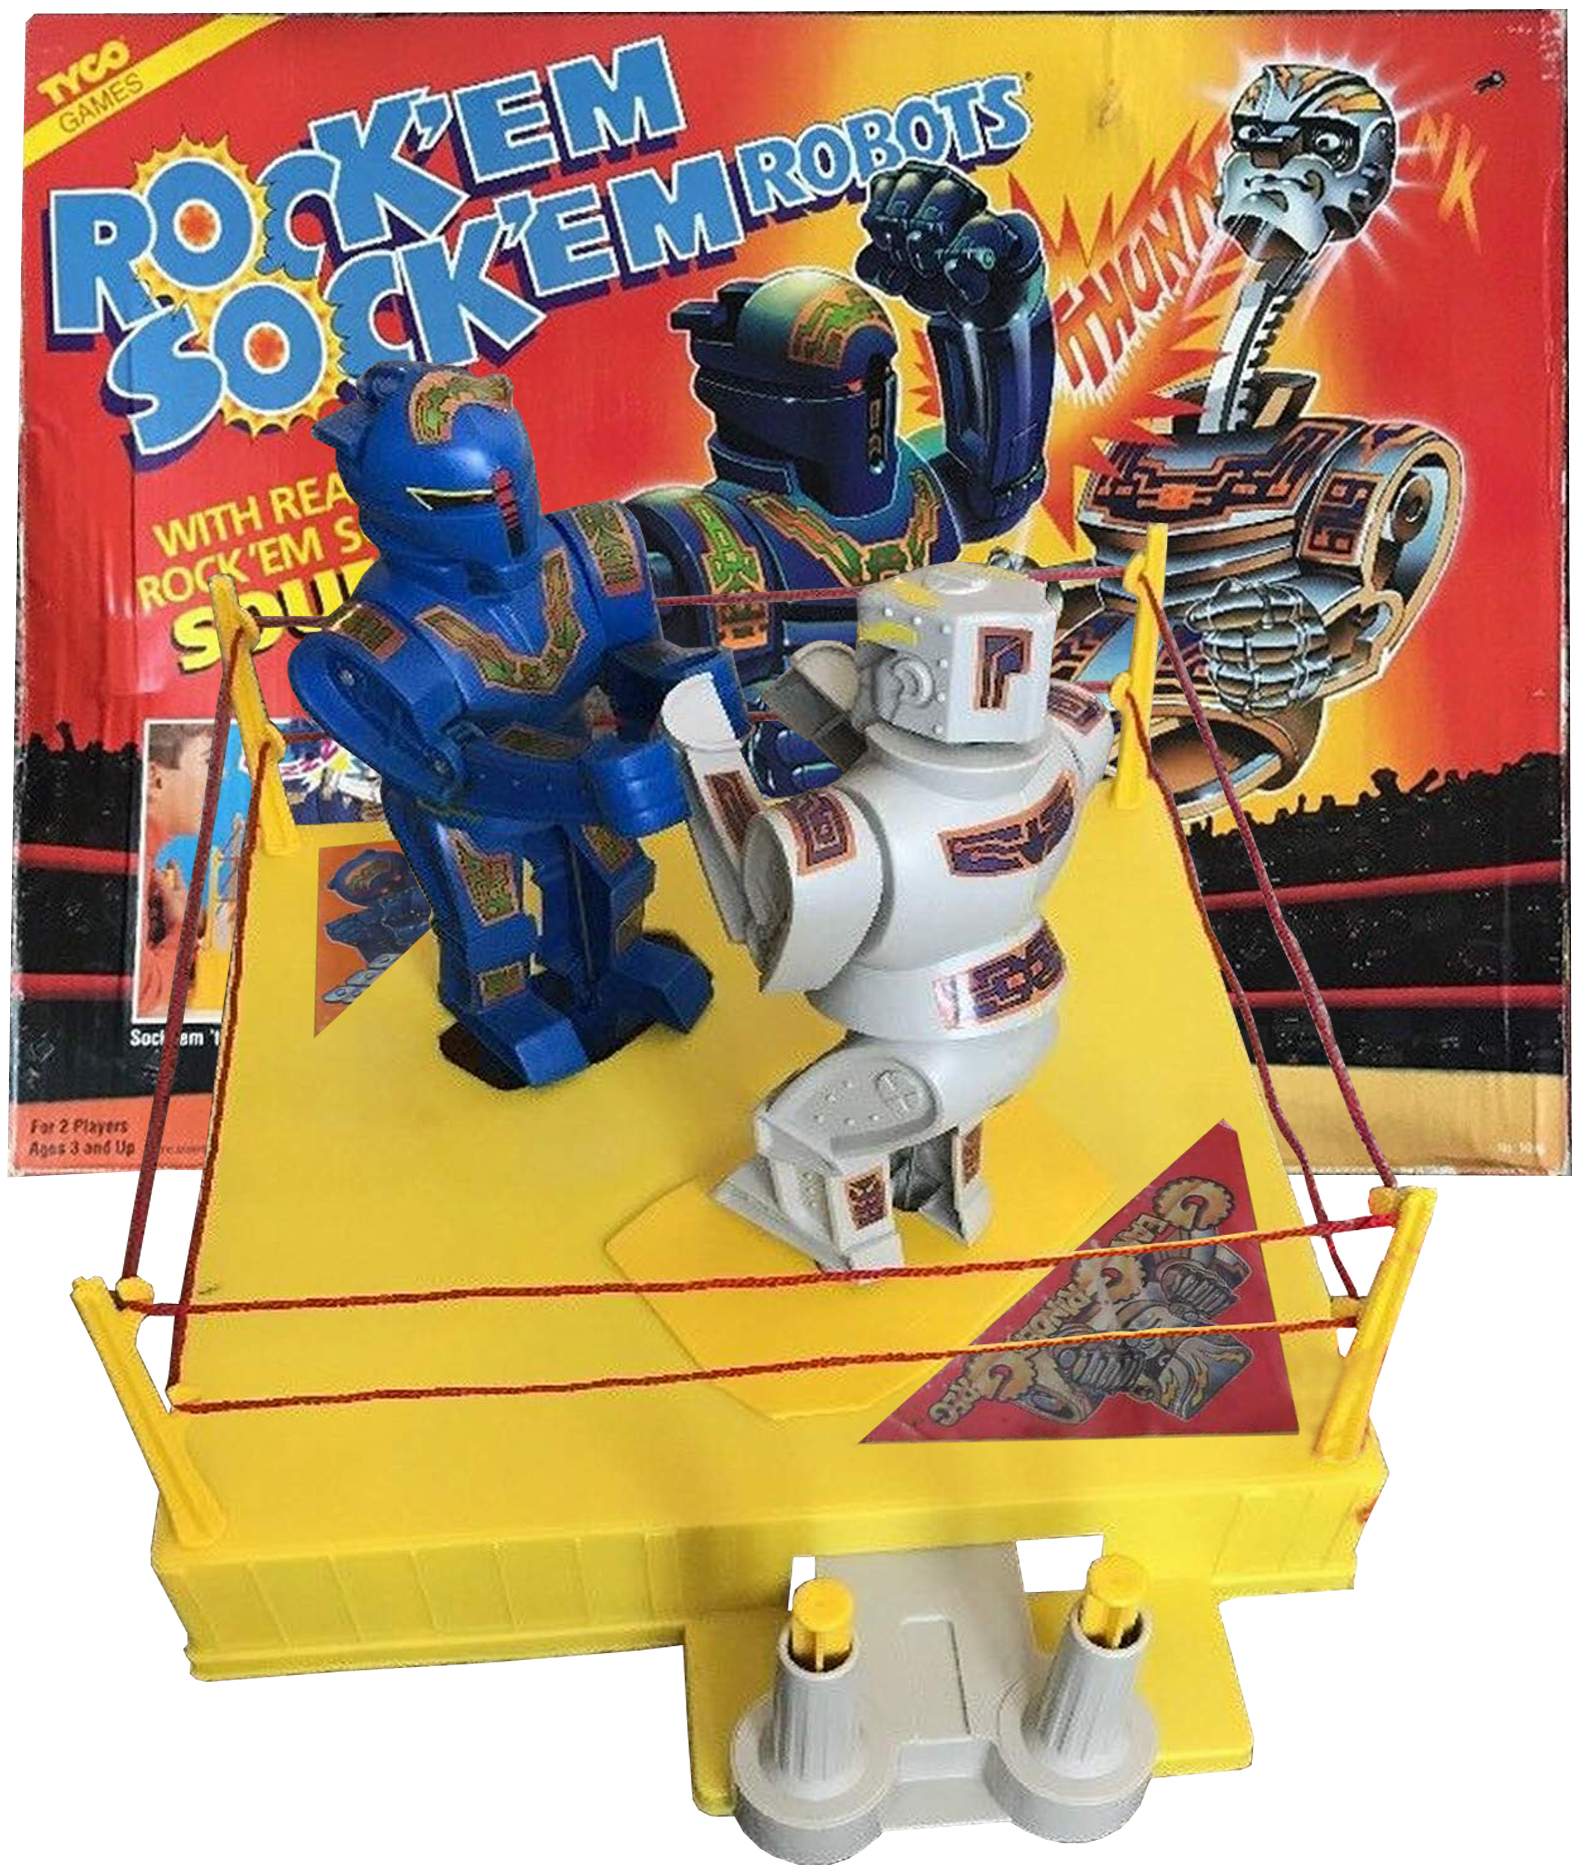 Rock 'Em Sock 'Em Robots by Marx - The Old Robots Web Site